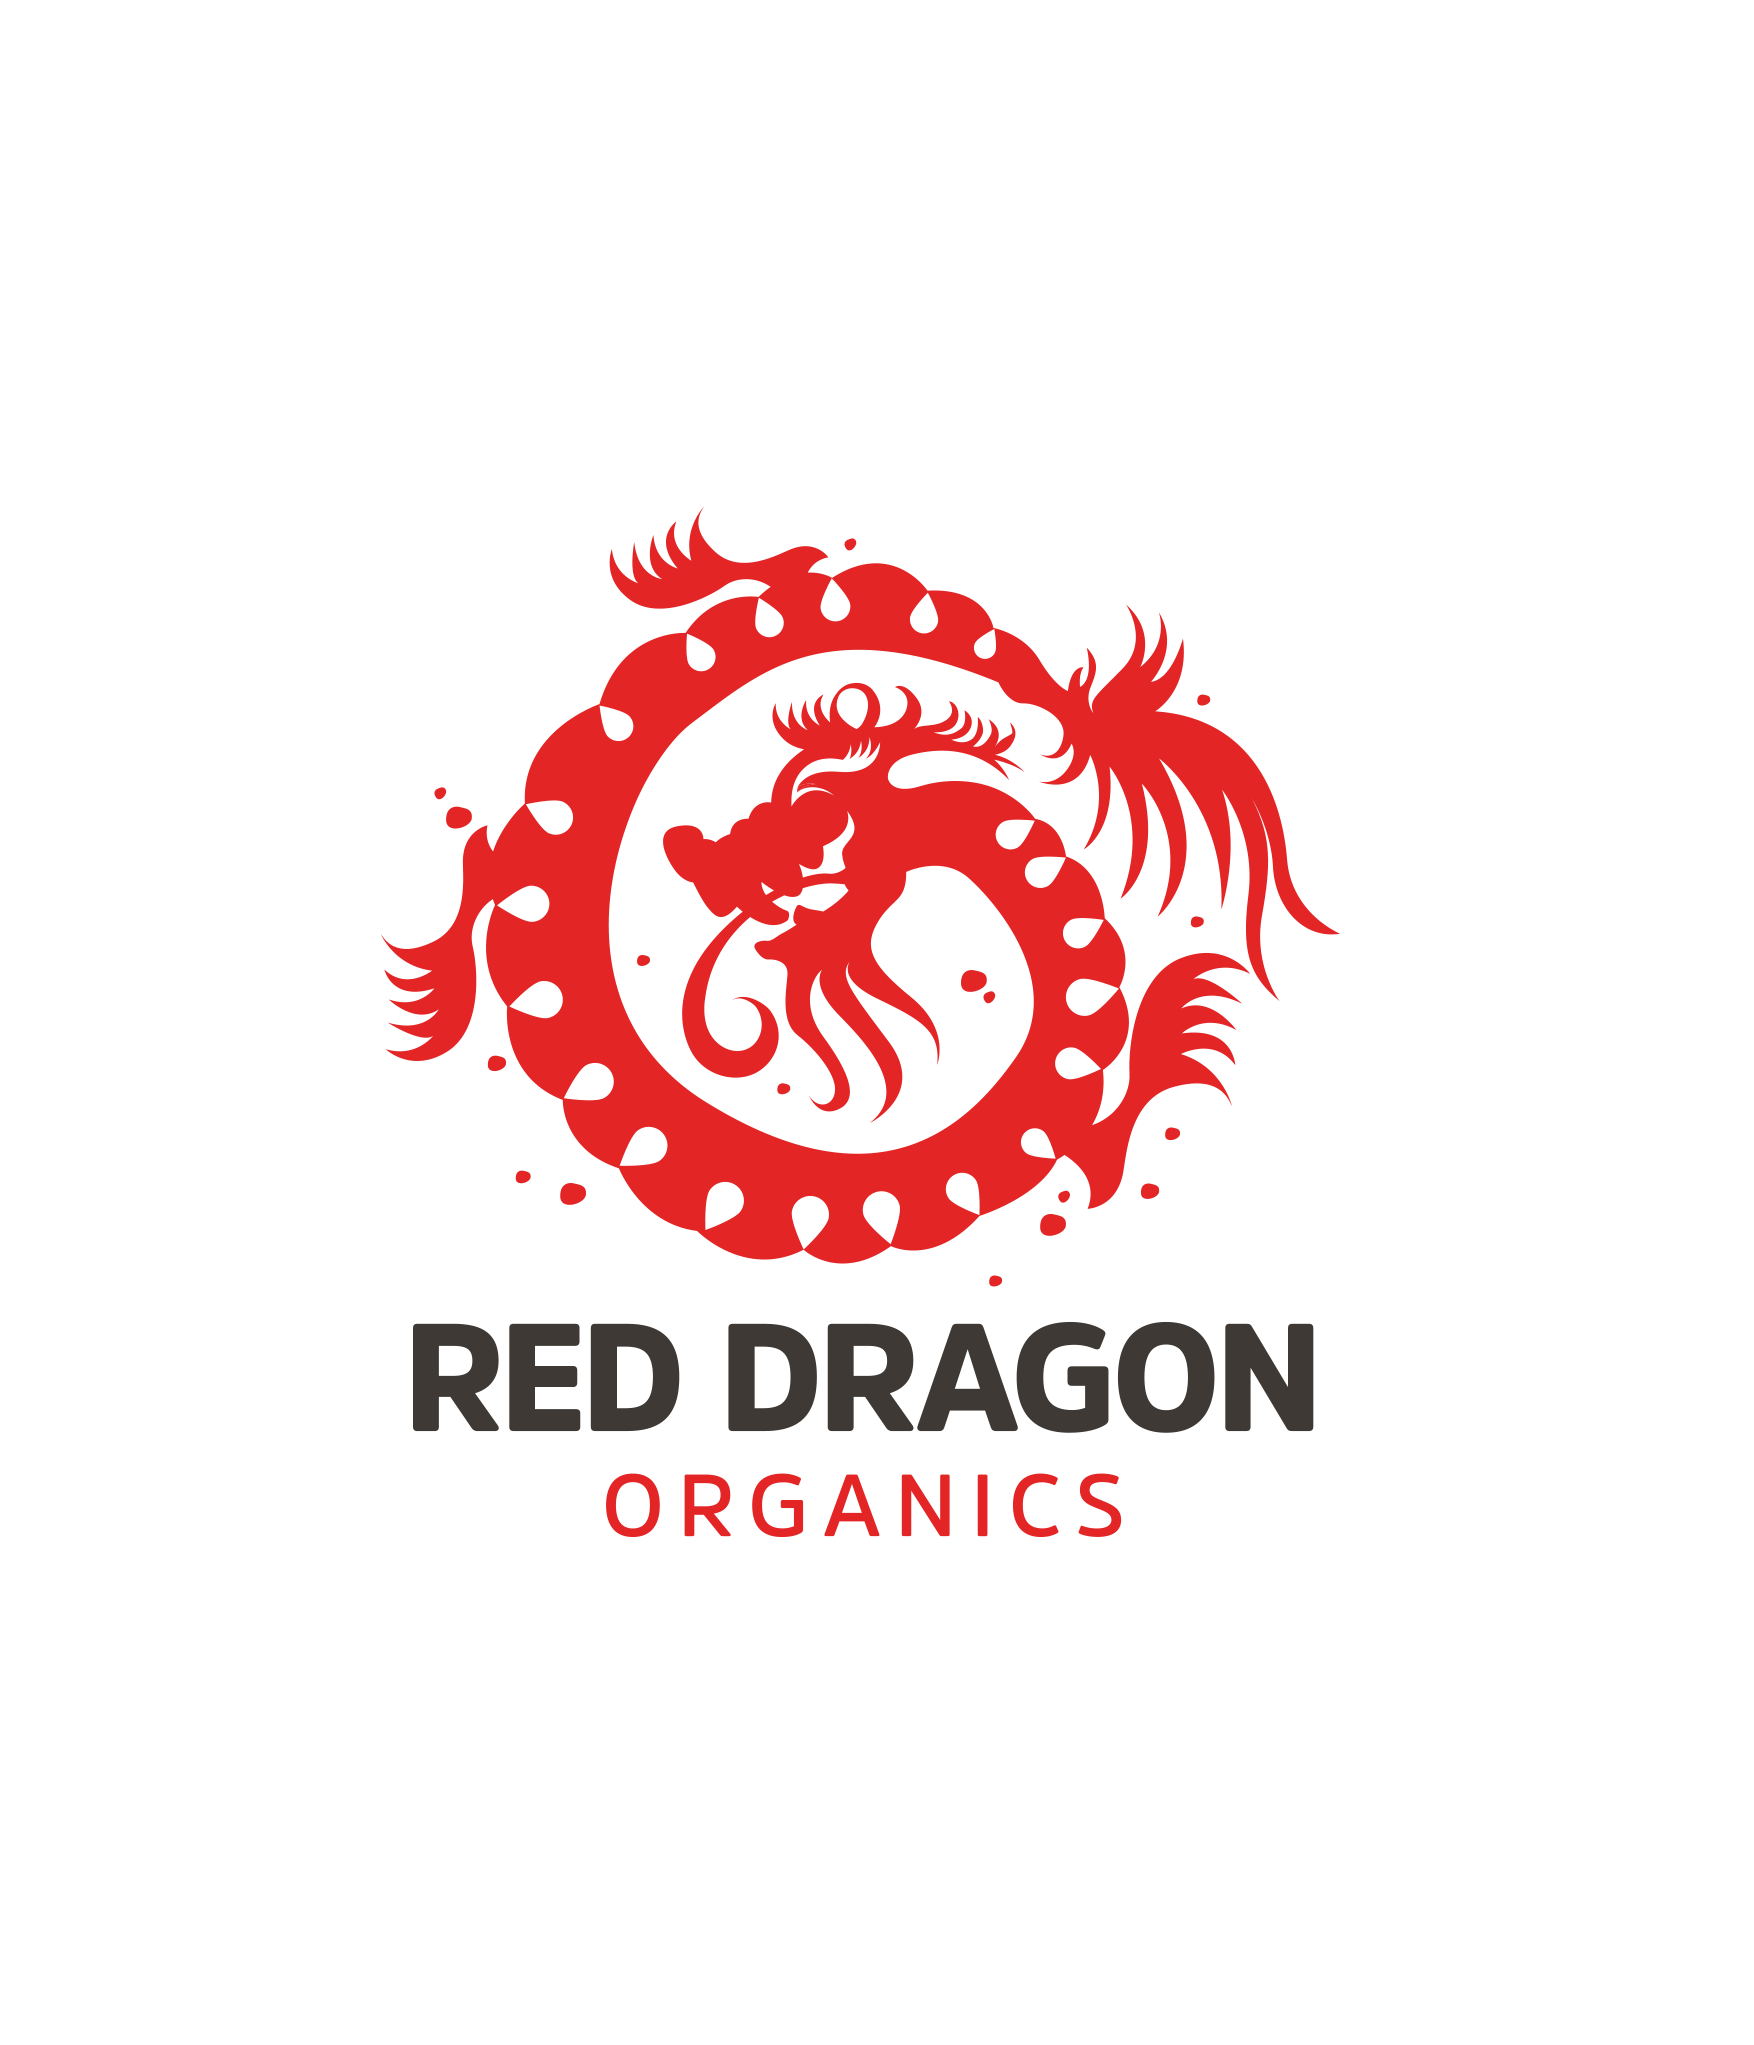 Red Dragon Logo - Myth of the Dragon - Red Dragon Organics